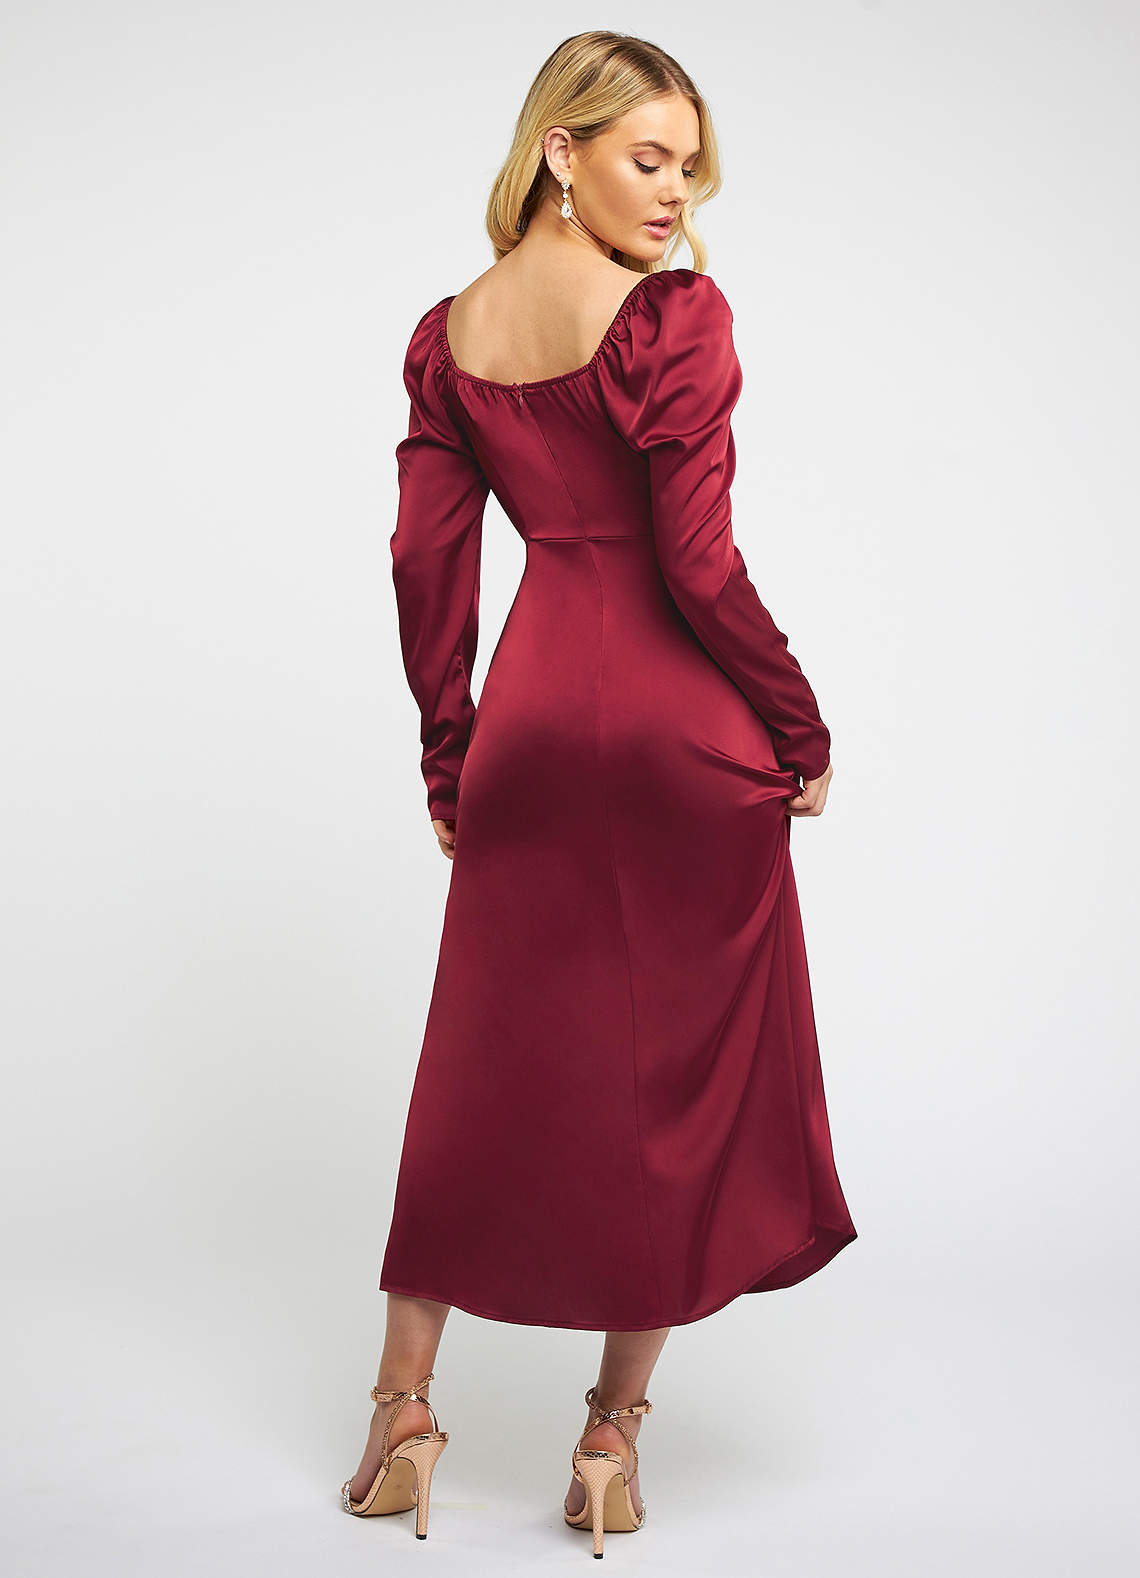 Aspen Burgundy Satin Long Sleeve Midi Dress image1